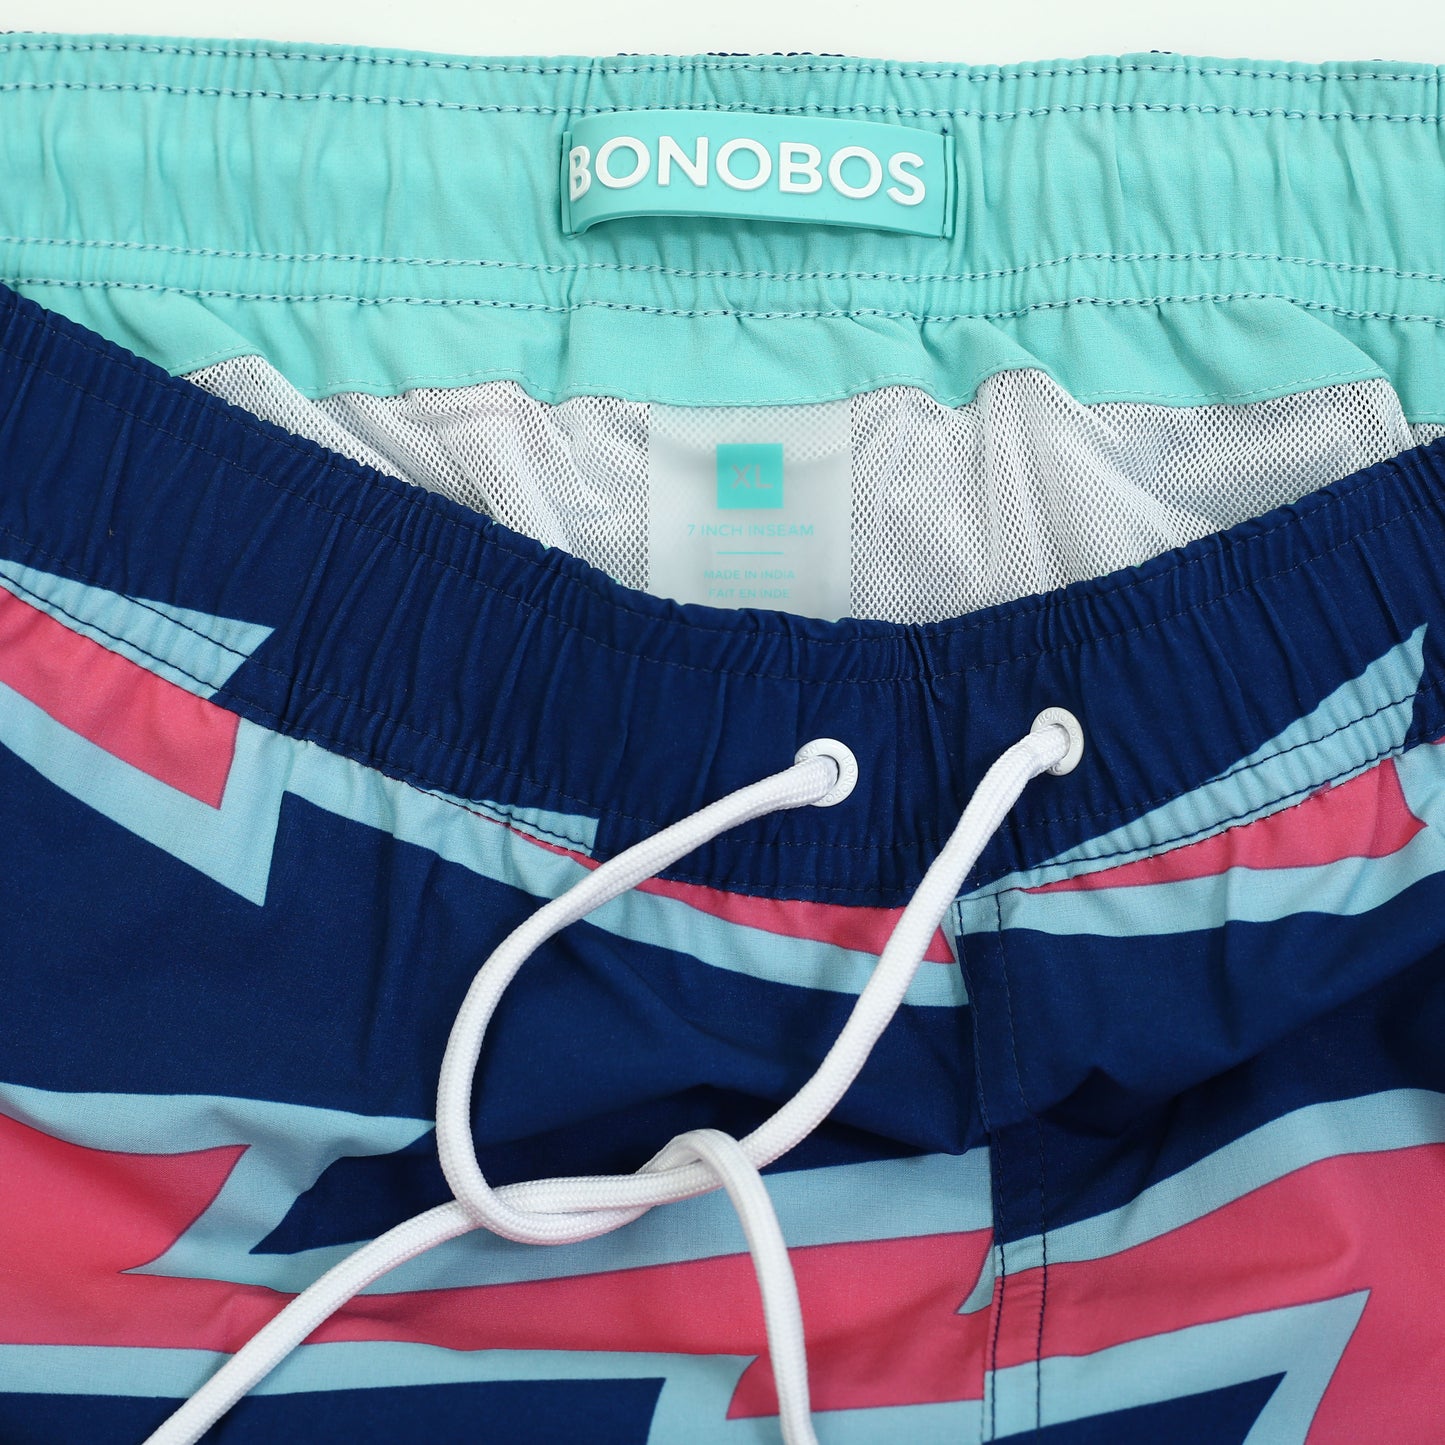 Bonobos Riviera Recycled Swim Patterned Striped Print Trunks Shorts